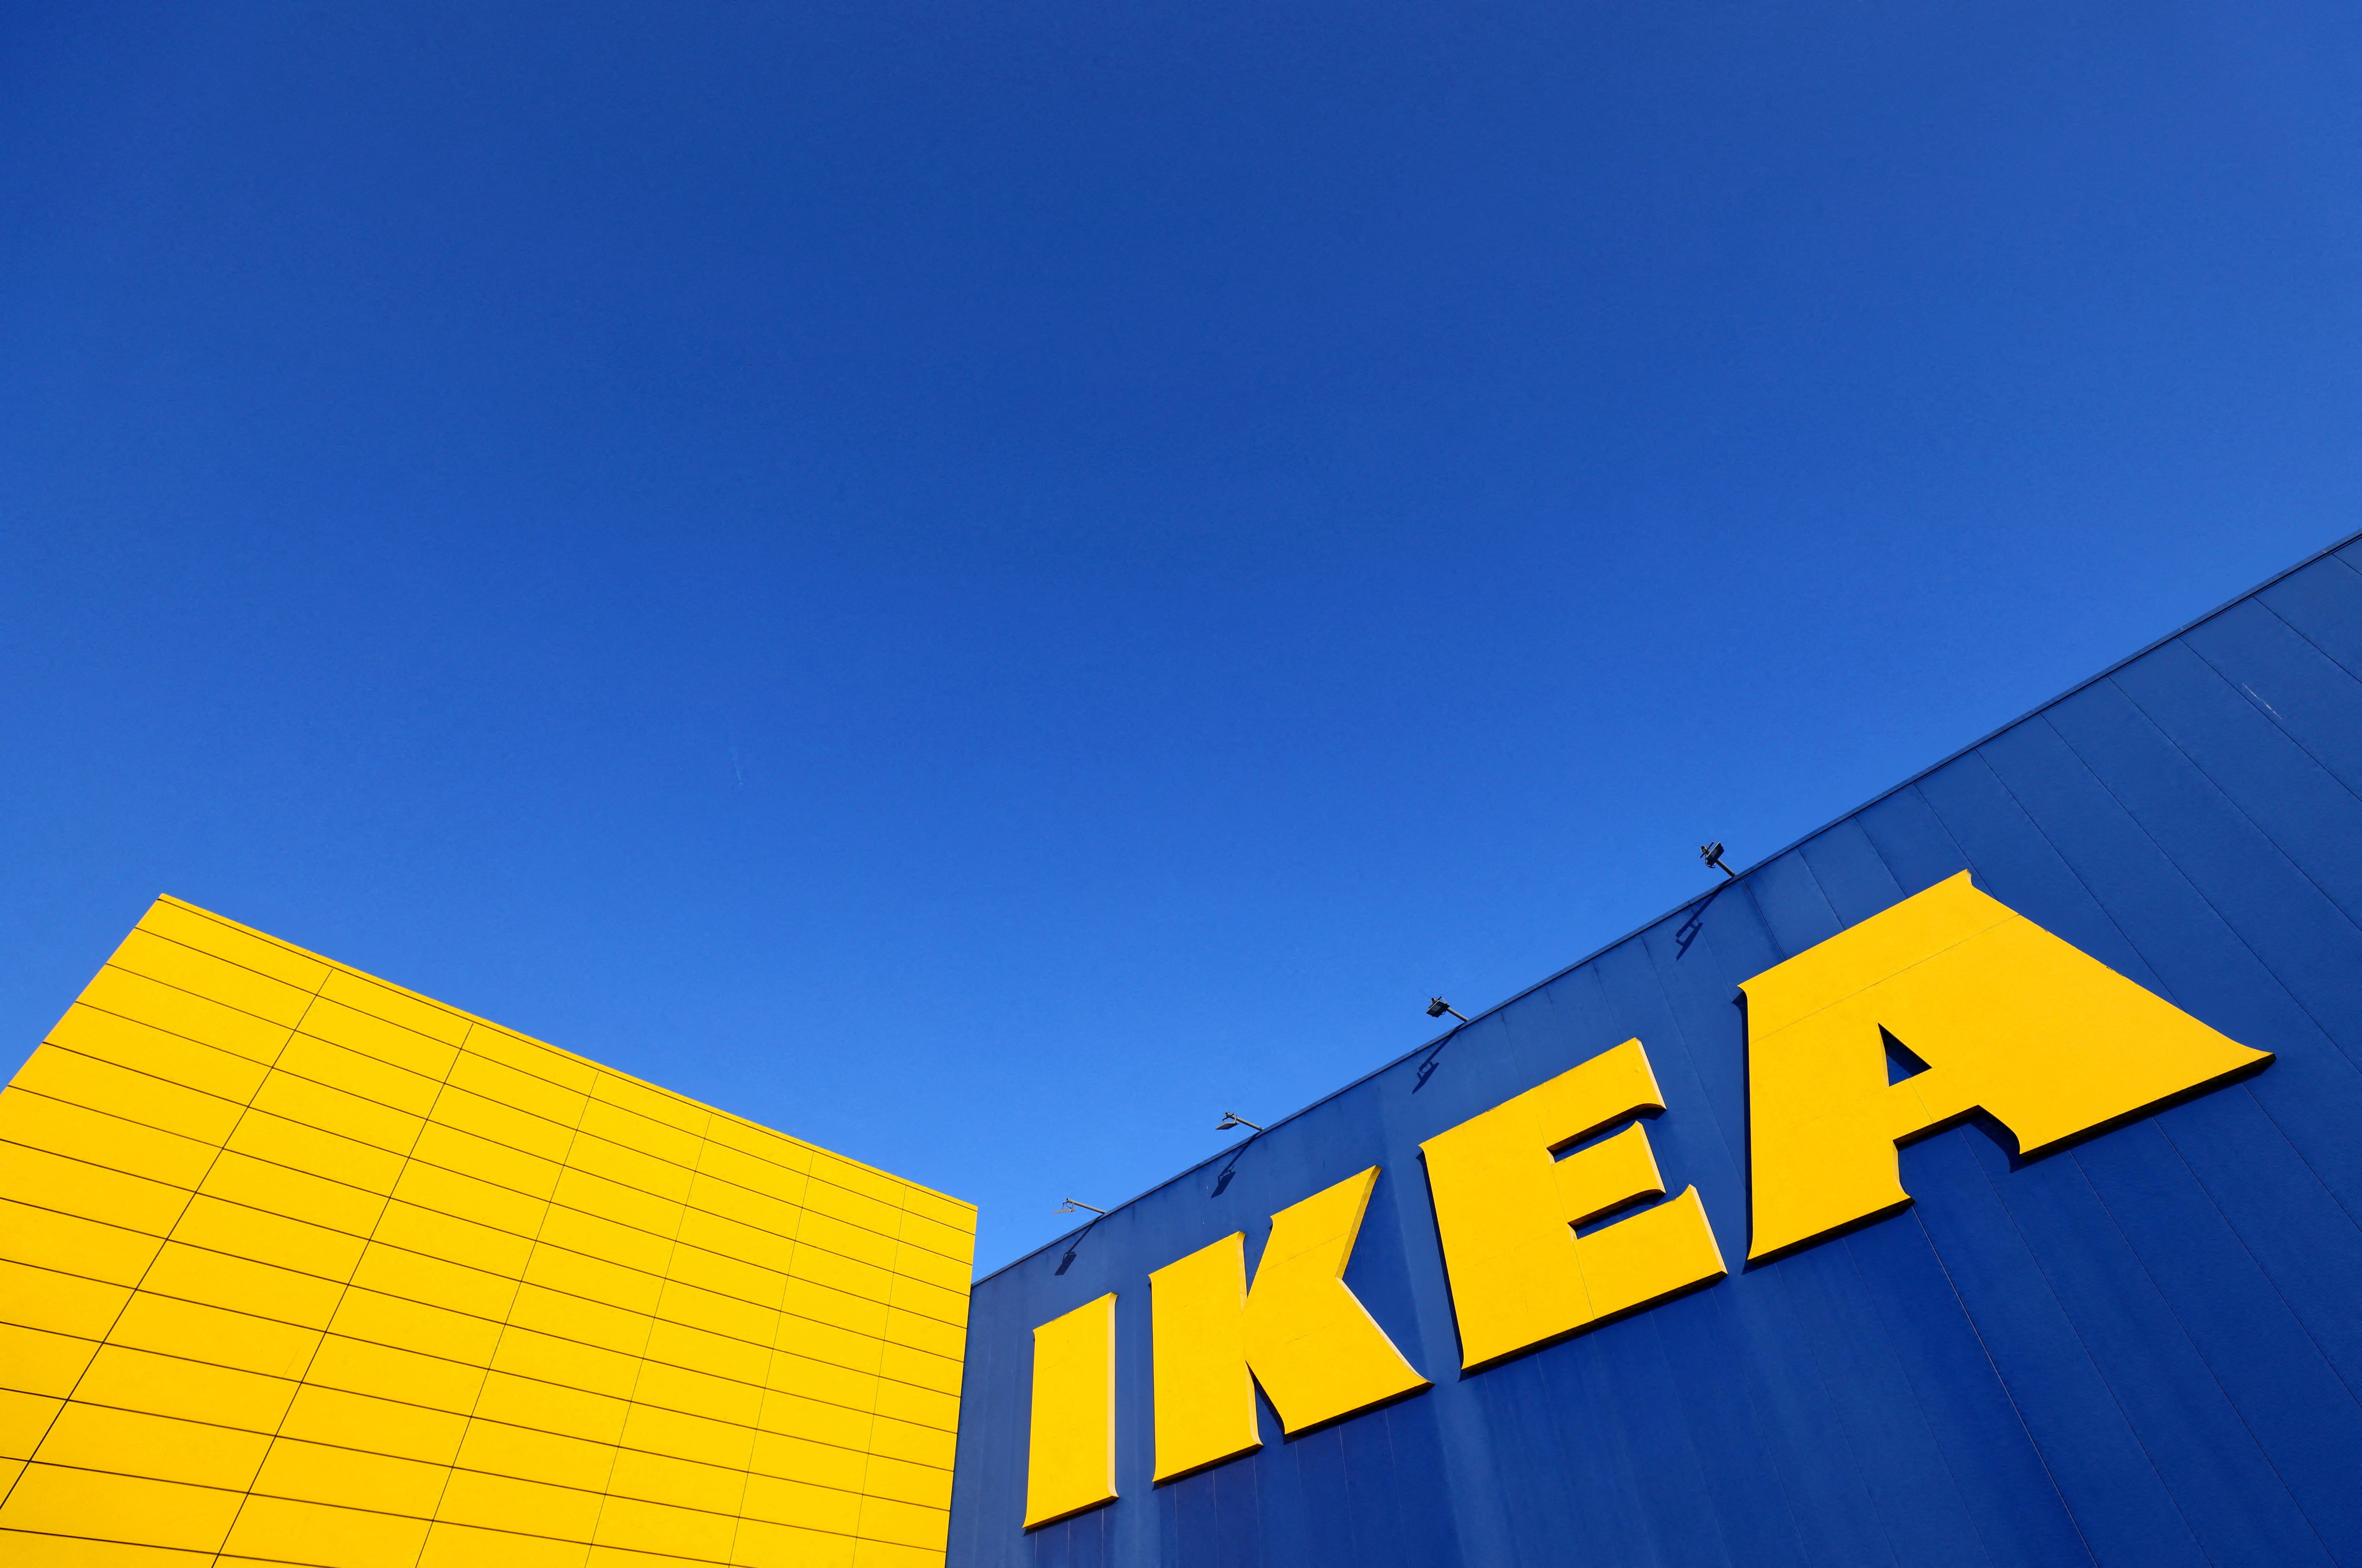 We've reached peak home furnishings says IKEA chief